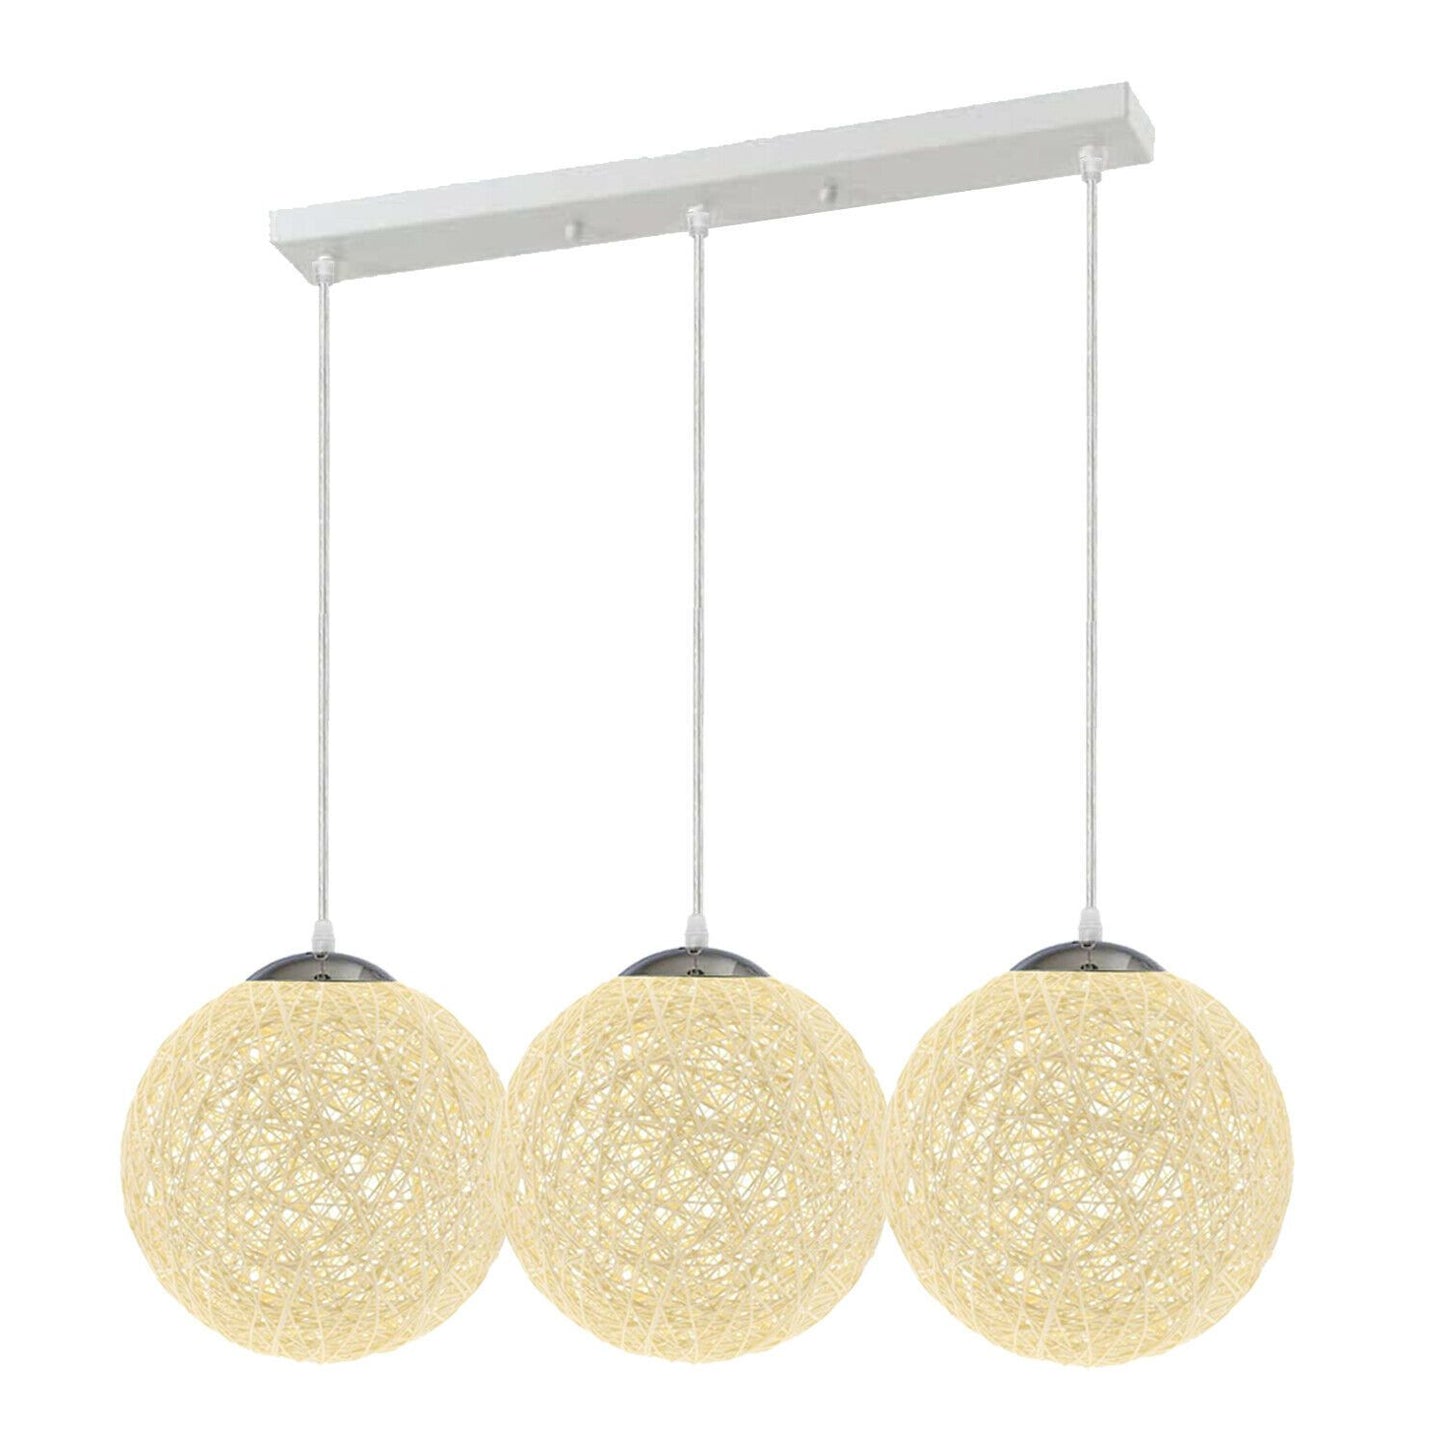 3 Way Cream Rattan Wicker Woven Ball Globe Pendant Light Shades